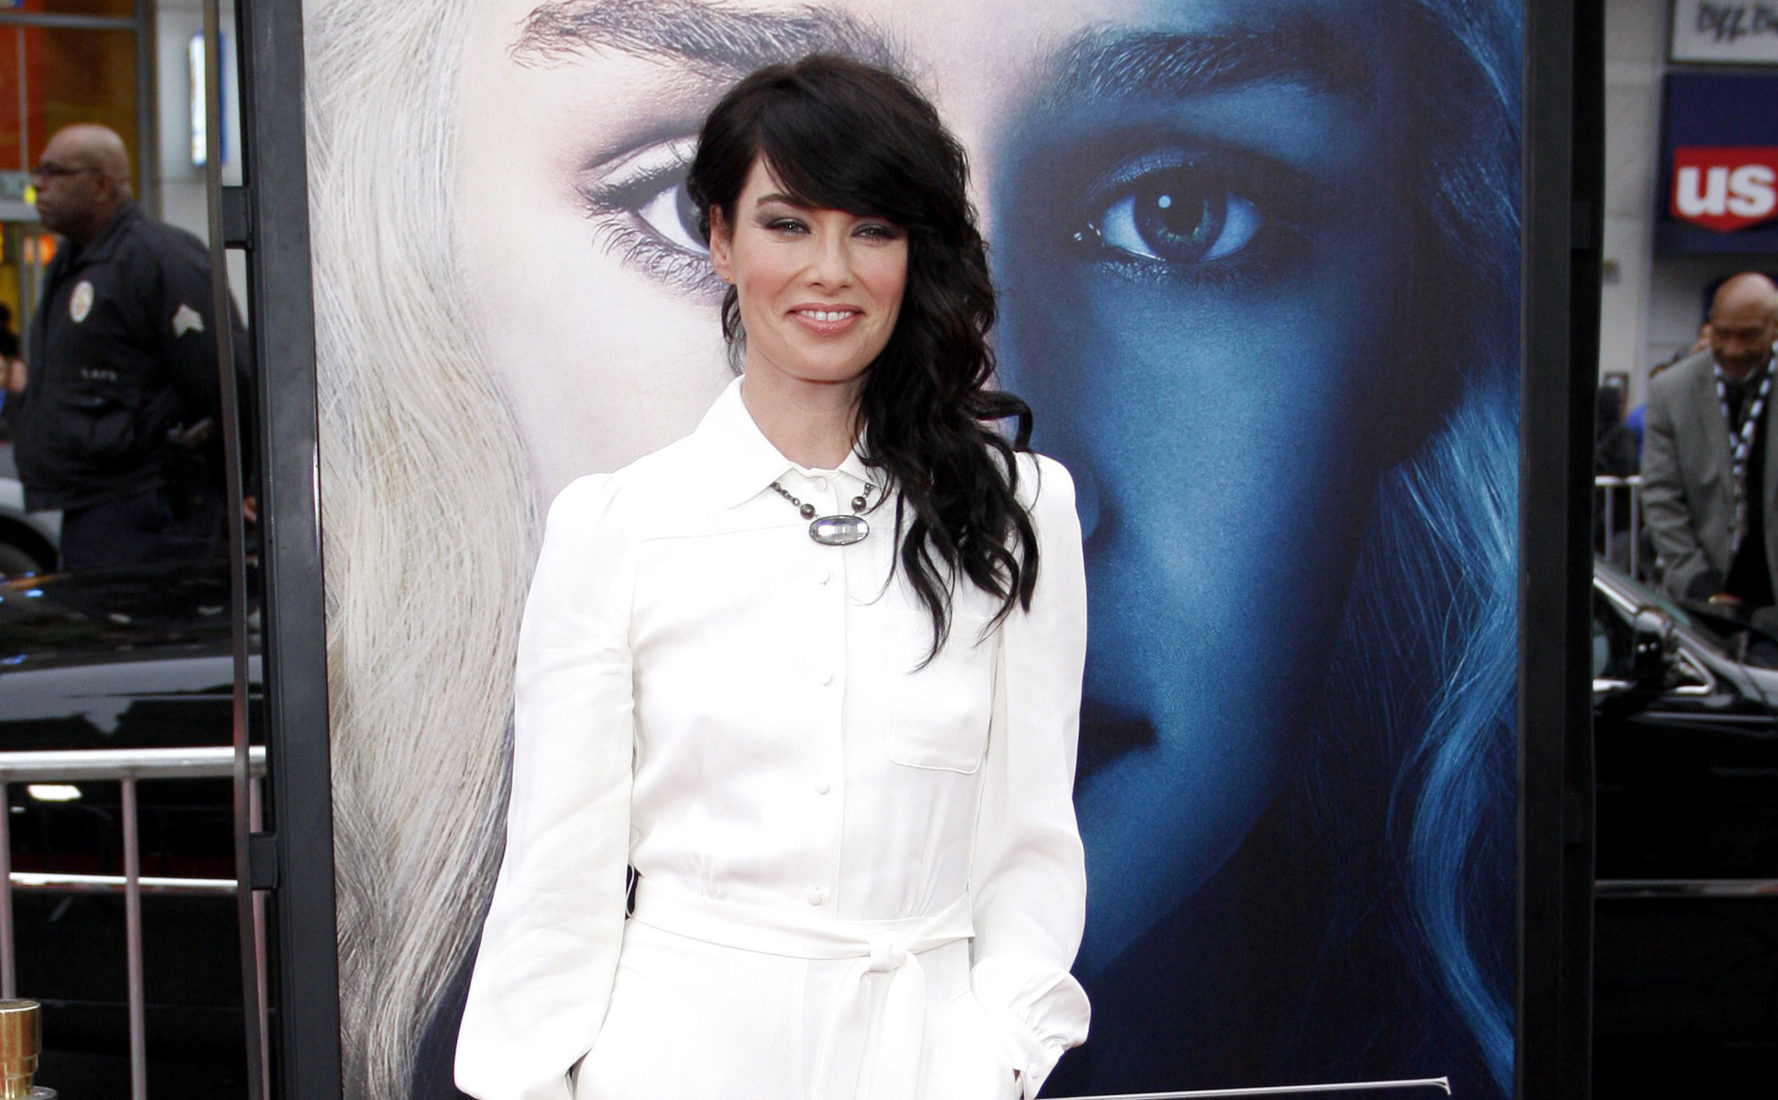 #The Abandons: Lena Headey (Game of Thrones) Joins Netflix Western Drama Series from Kurt Sutter